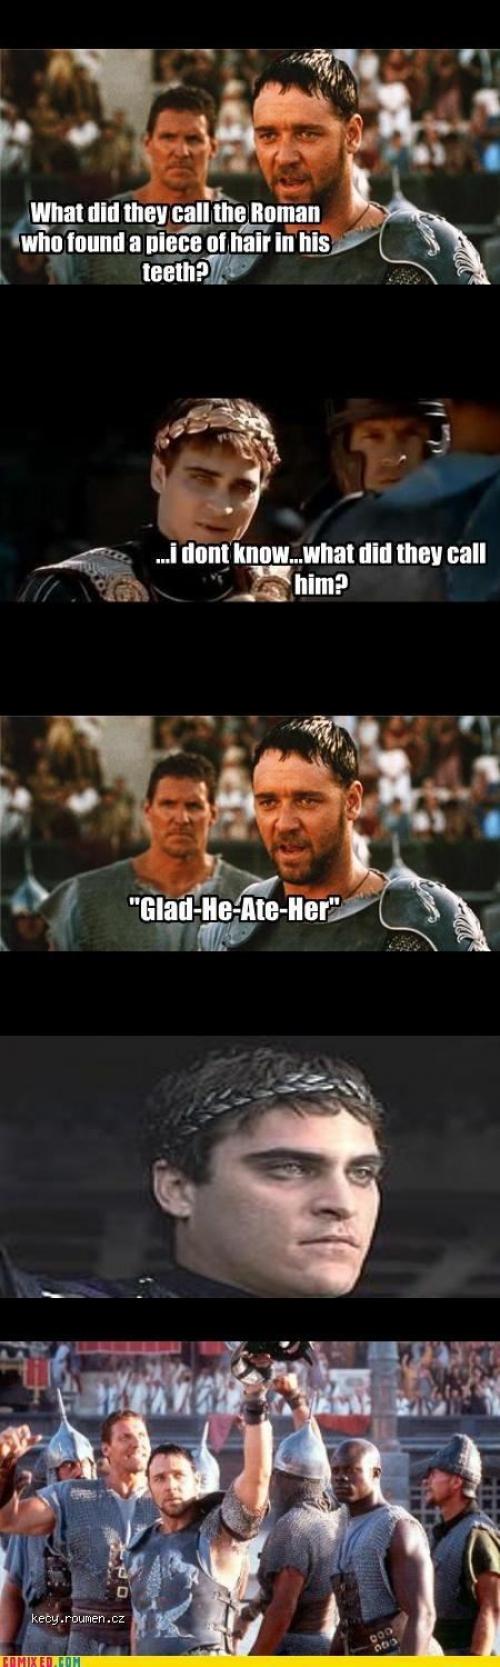  Gladiator joke 